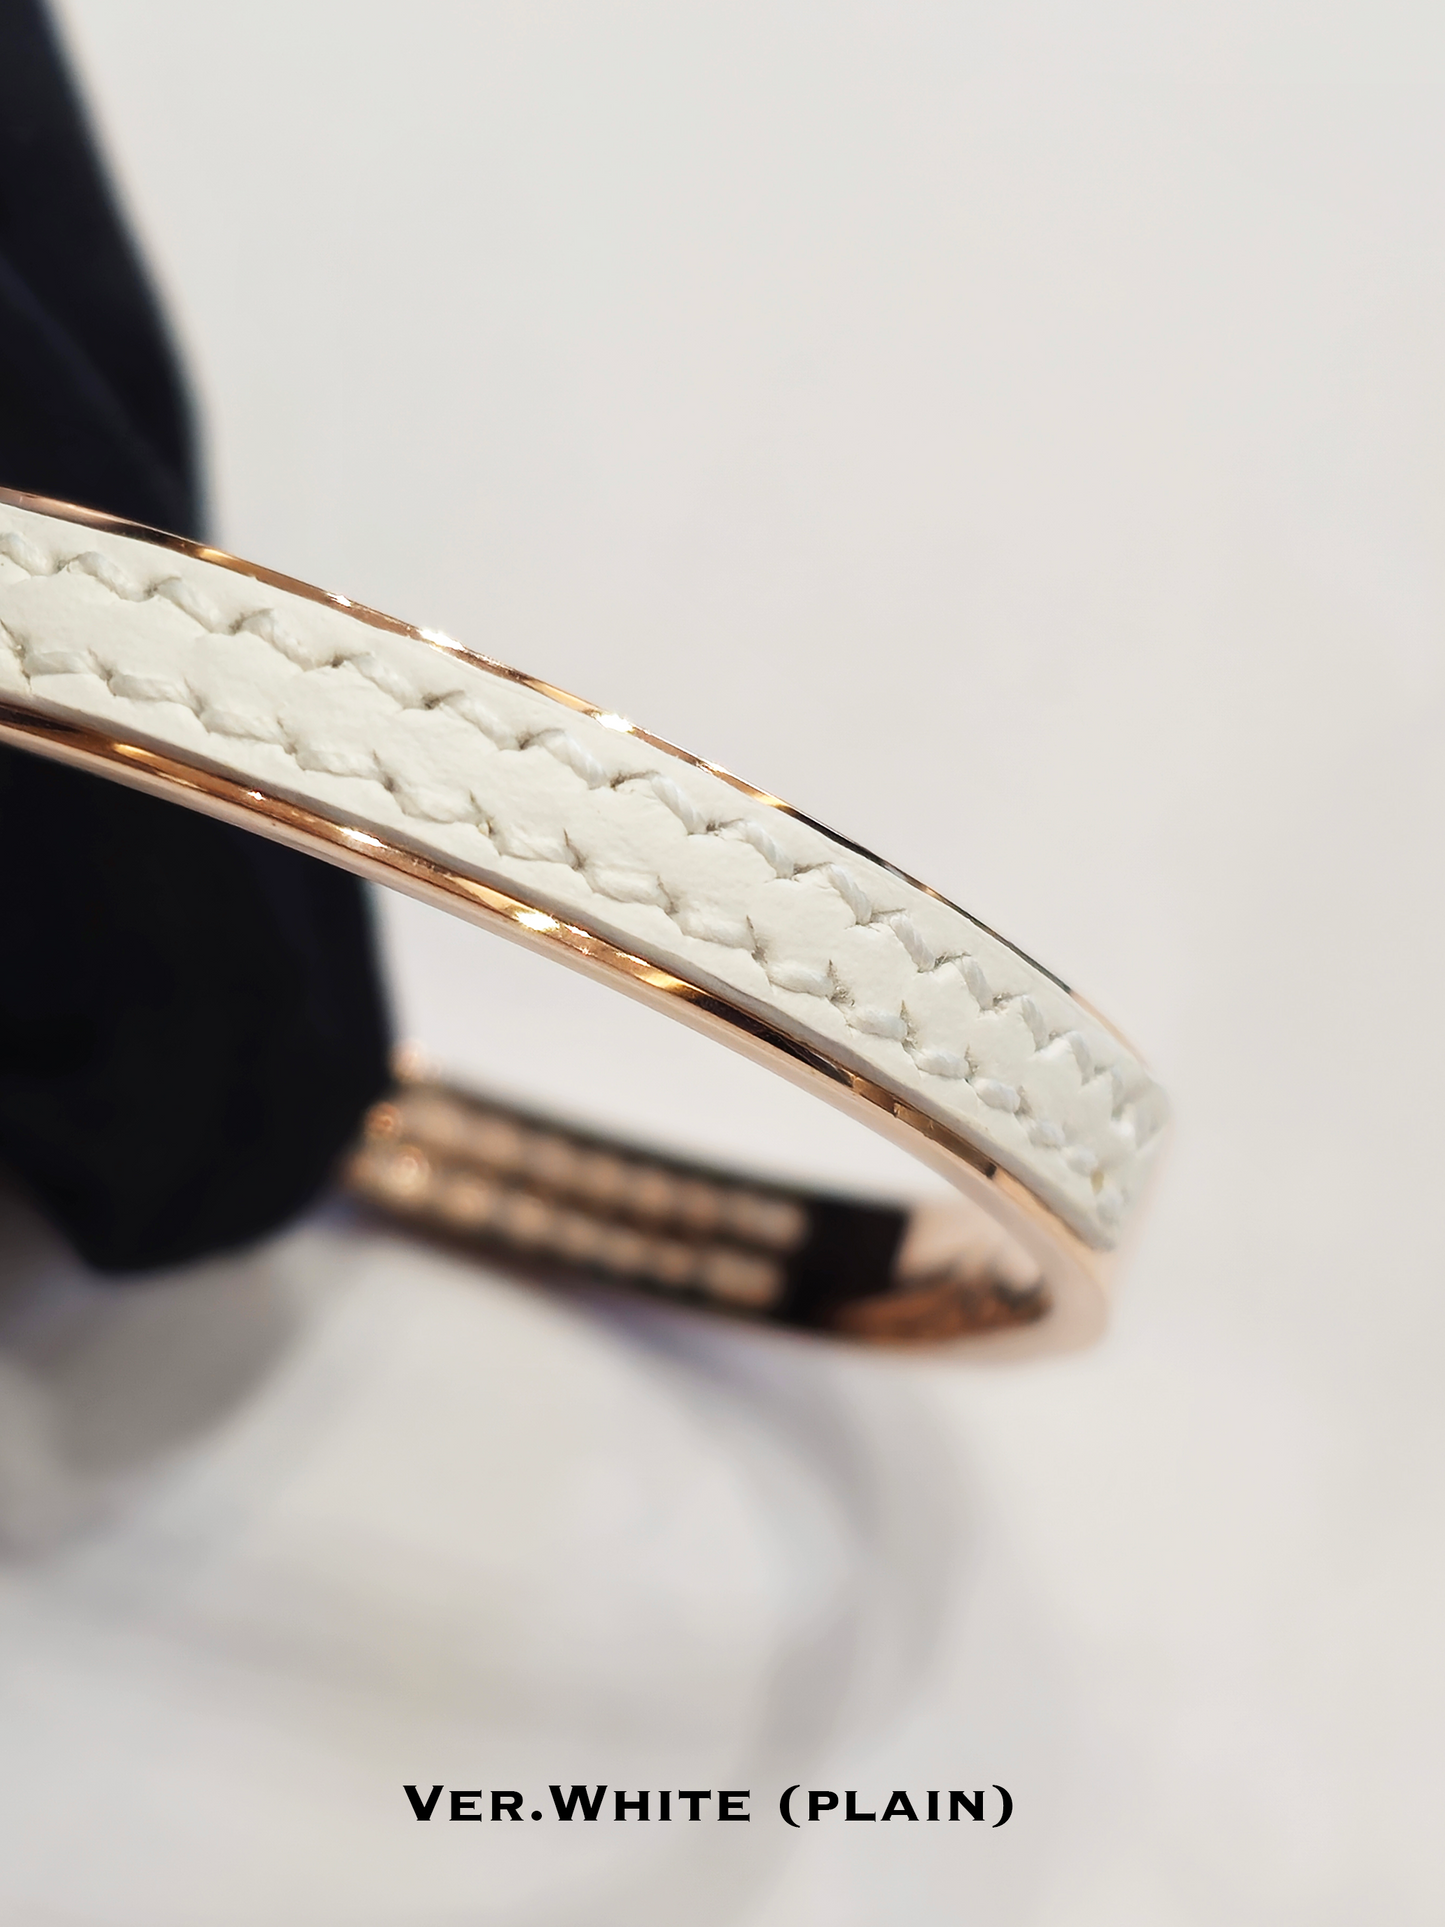 Twined Leather Bracelet, Large, White (Plain), Pink Opal